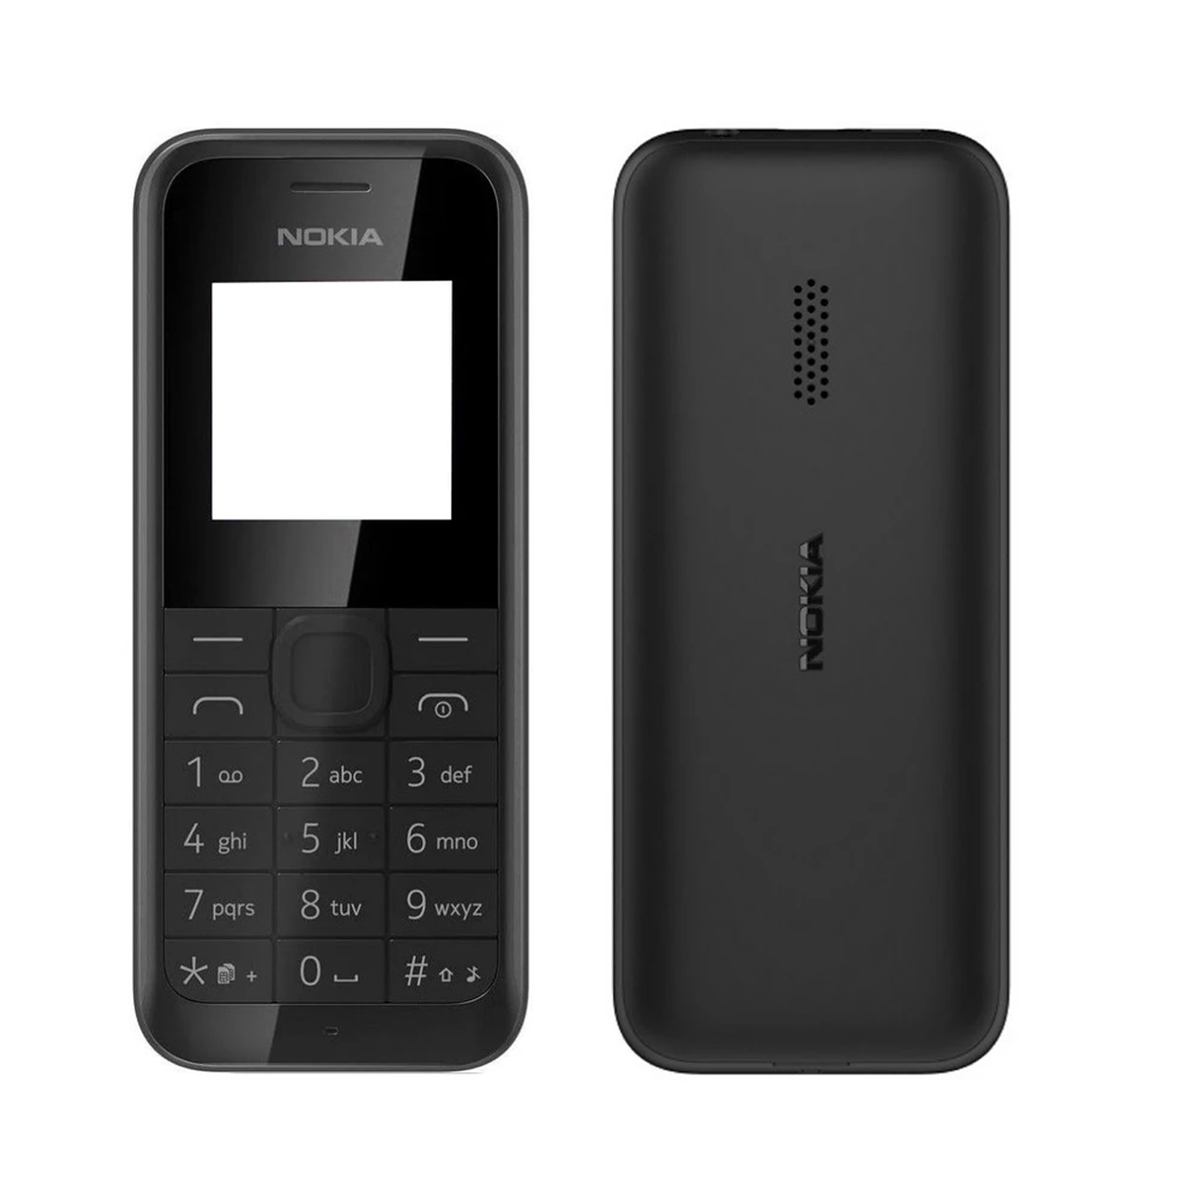 فریم گوشی نوکیا 105 2015 Dual sim مدل N105 -small-image